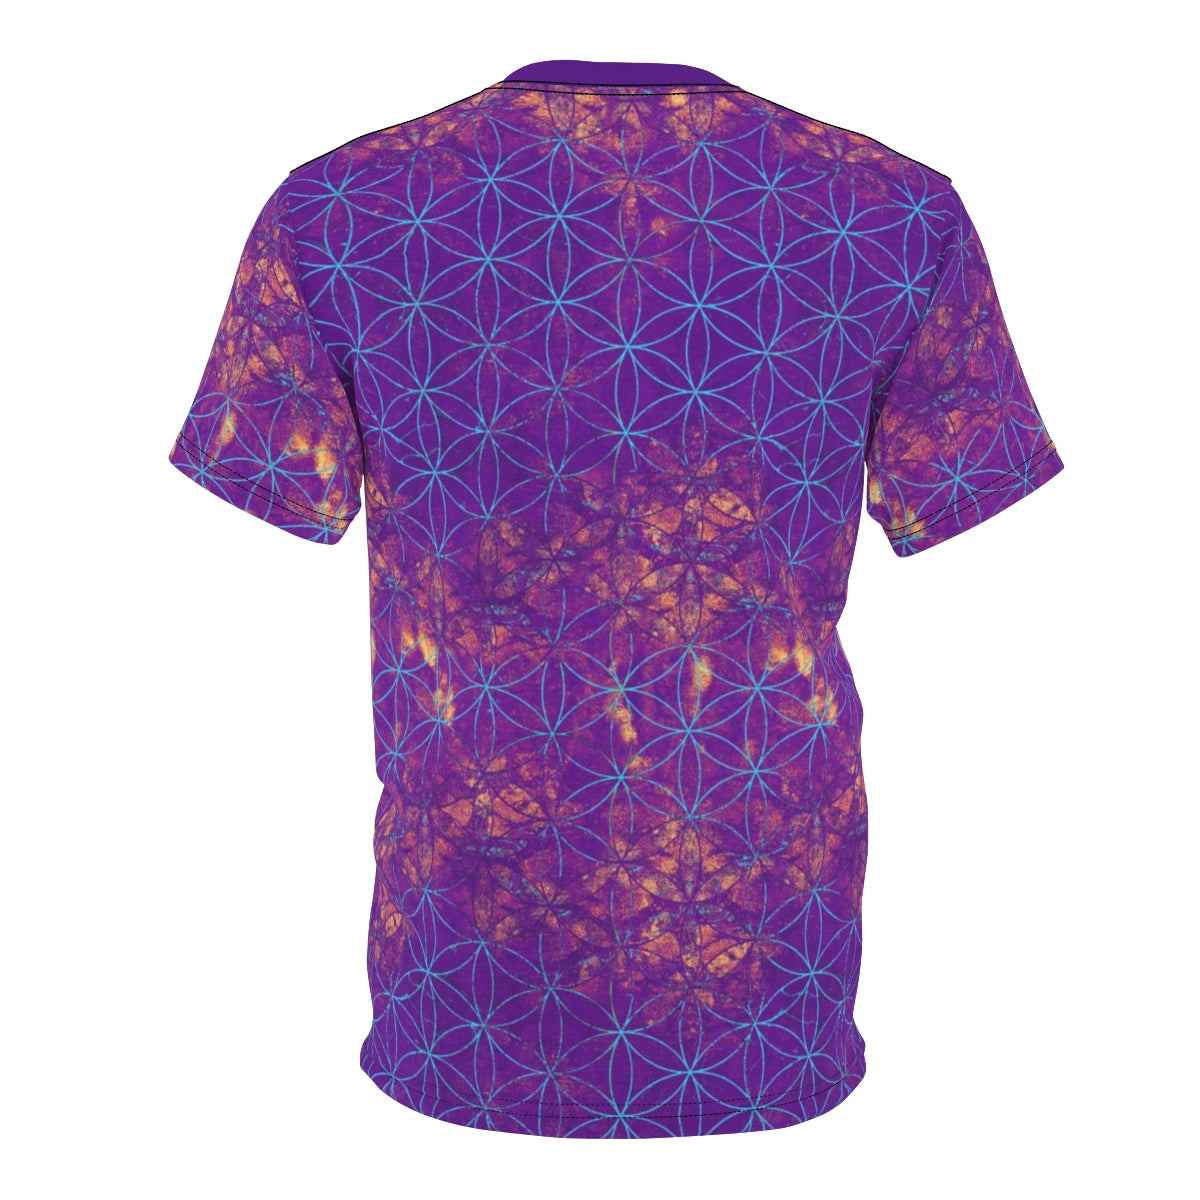 Flower of Life Hot Purple | Sacred Geometry Unisex T-Shirt